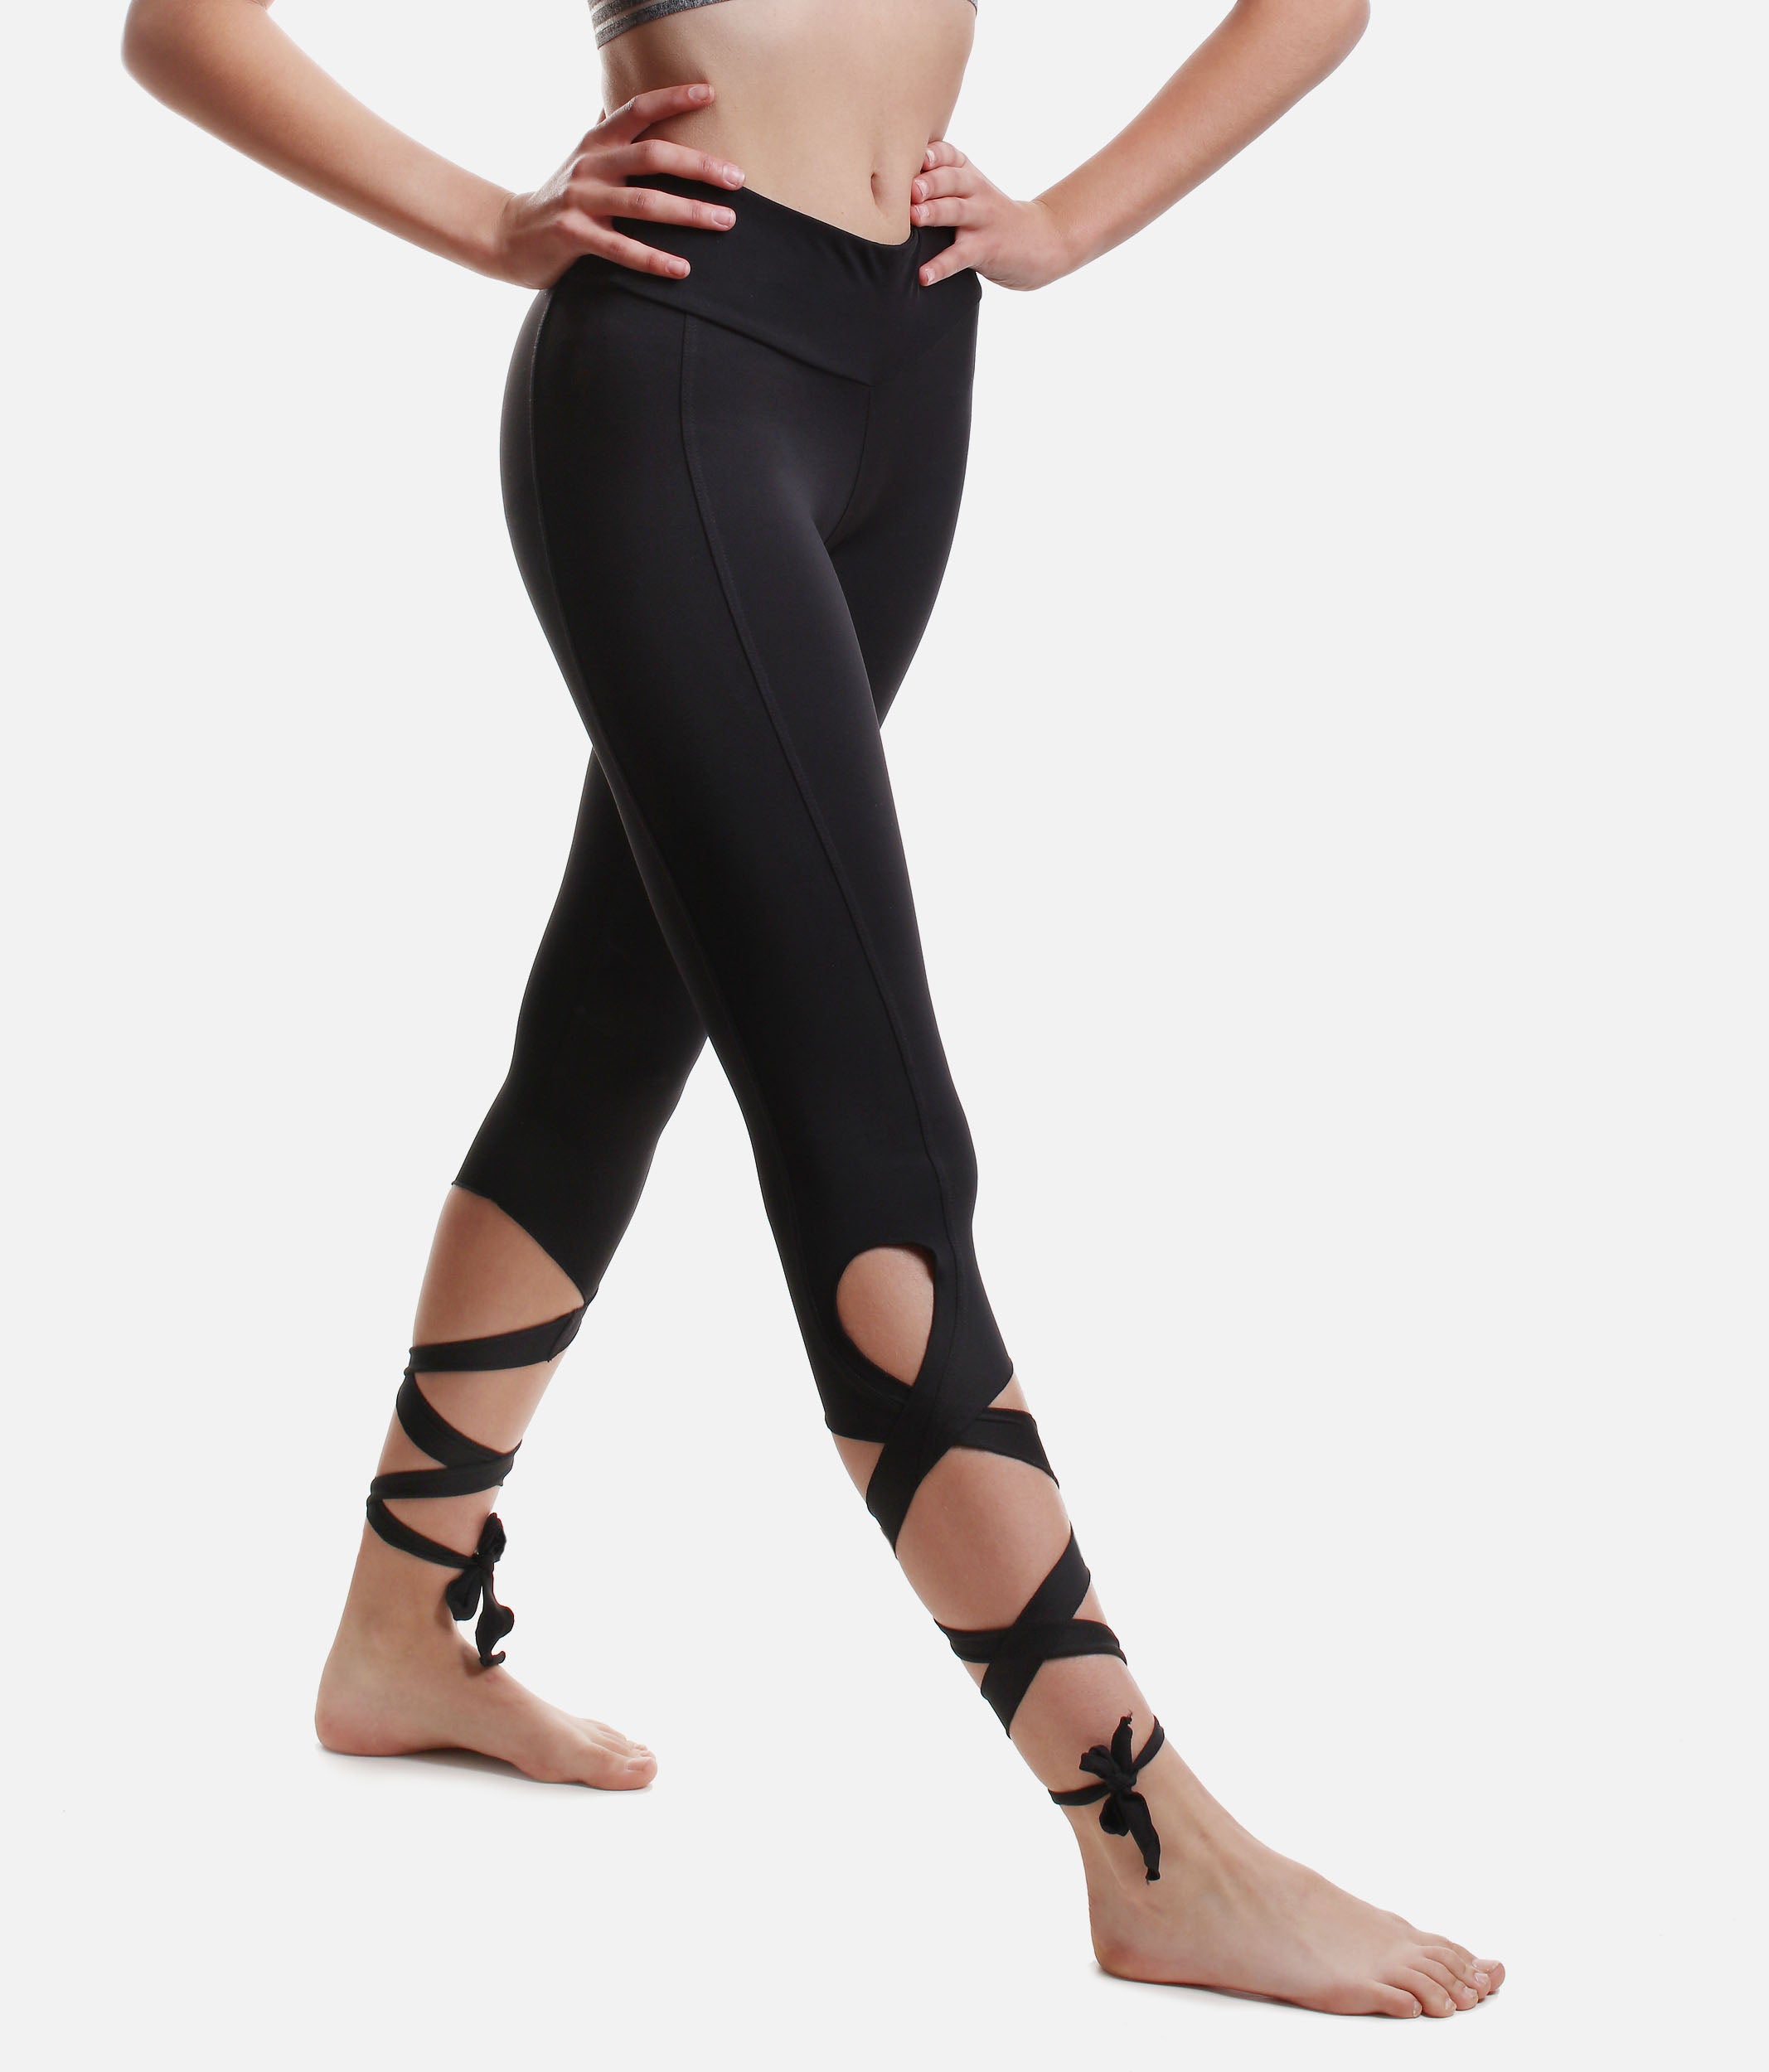 da-1561 - Danskin Women's Active Essential Supplex Capri Legging